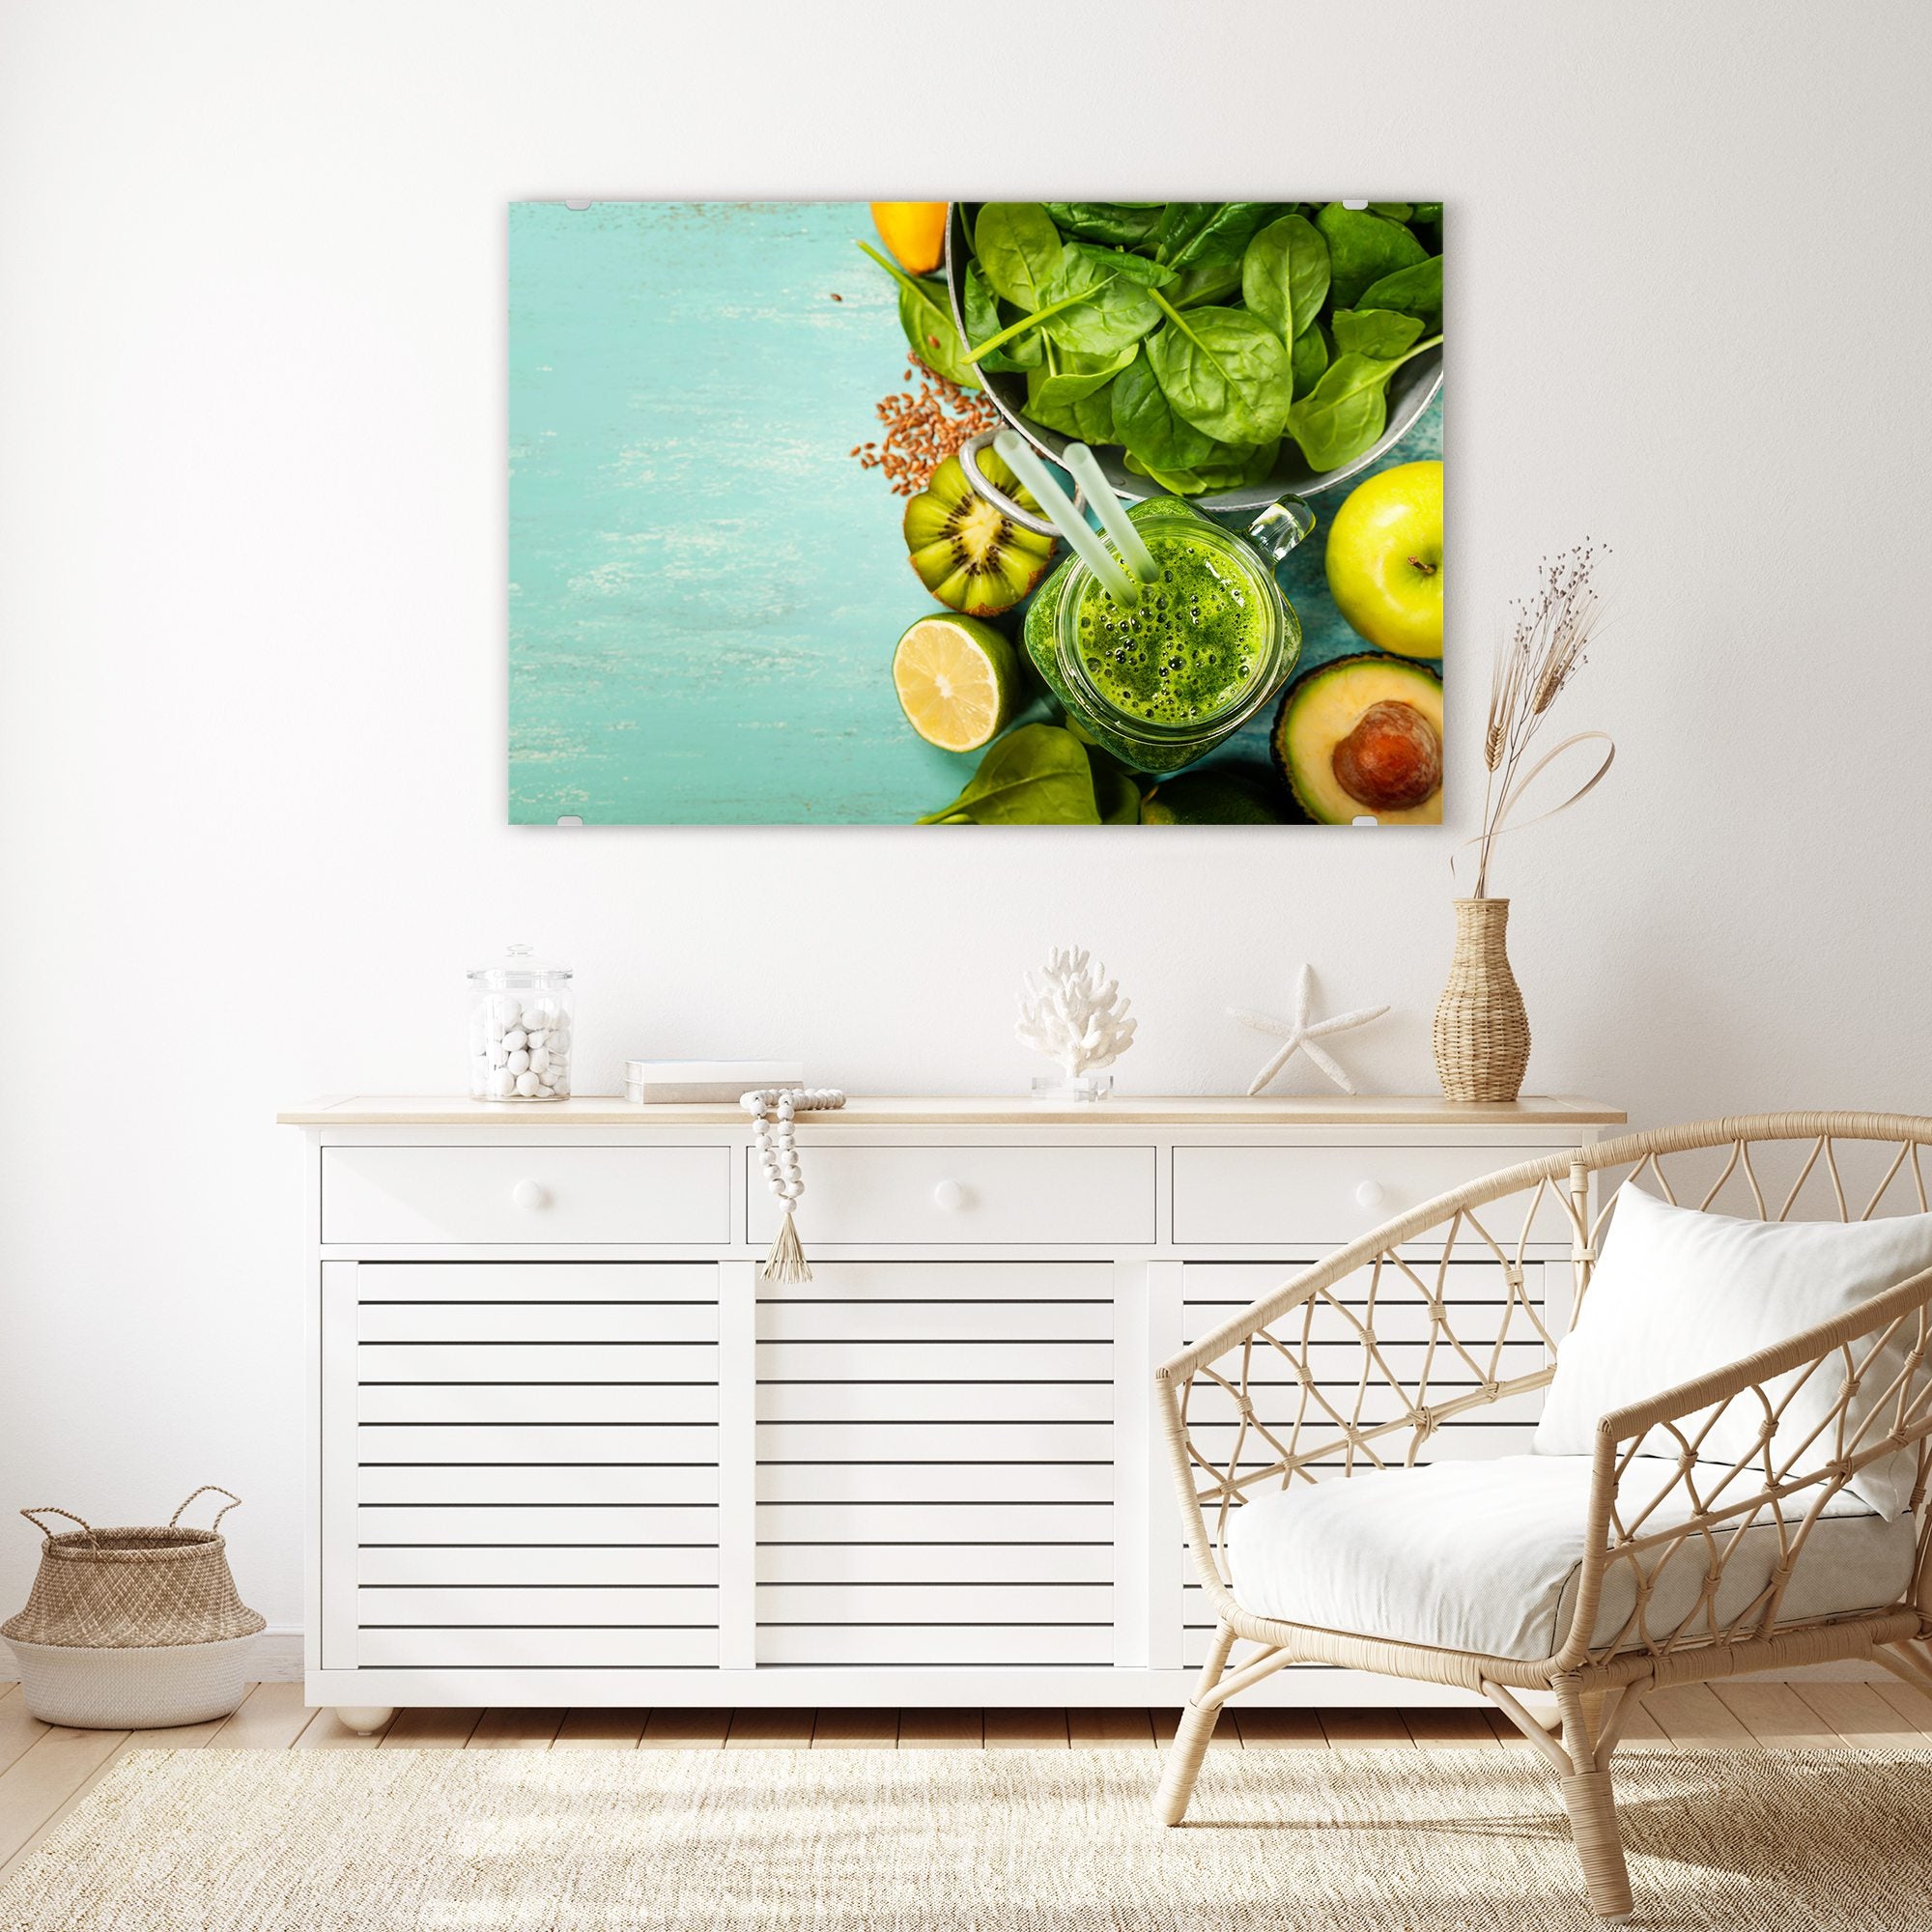 Wandbild - Salat und Avocado